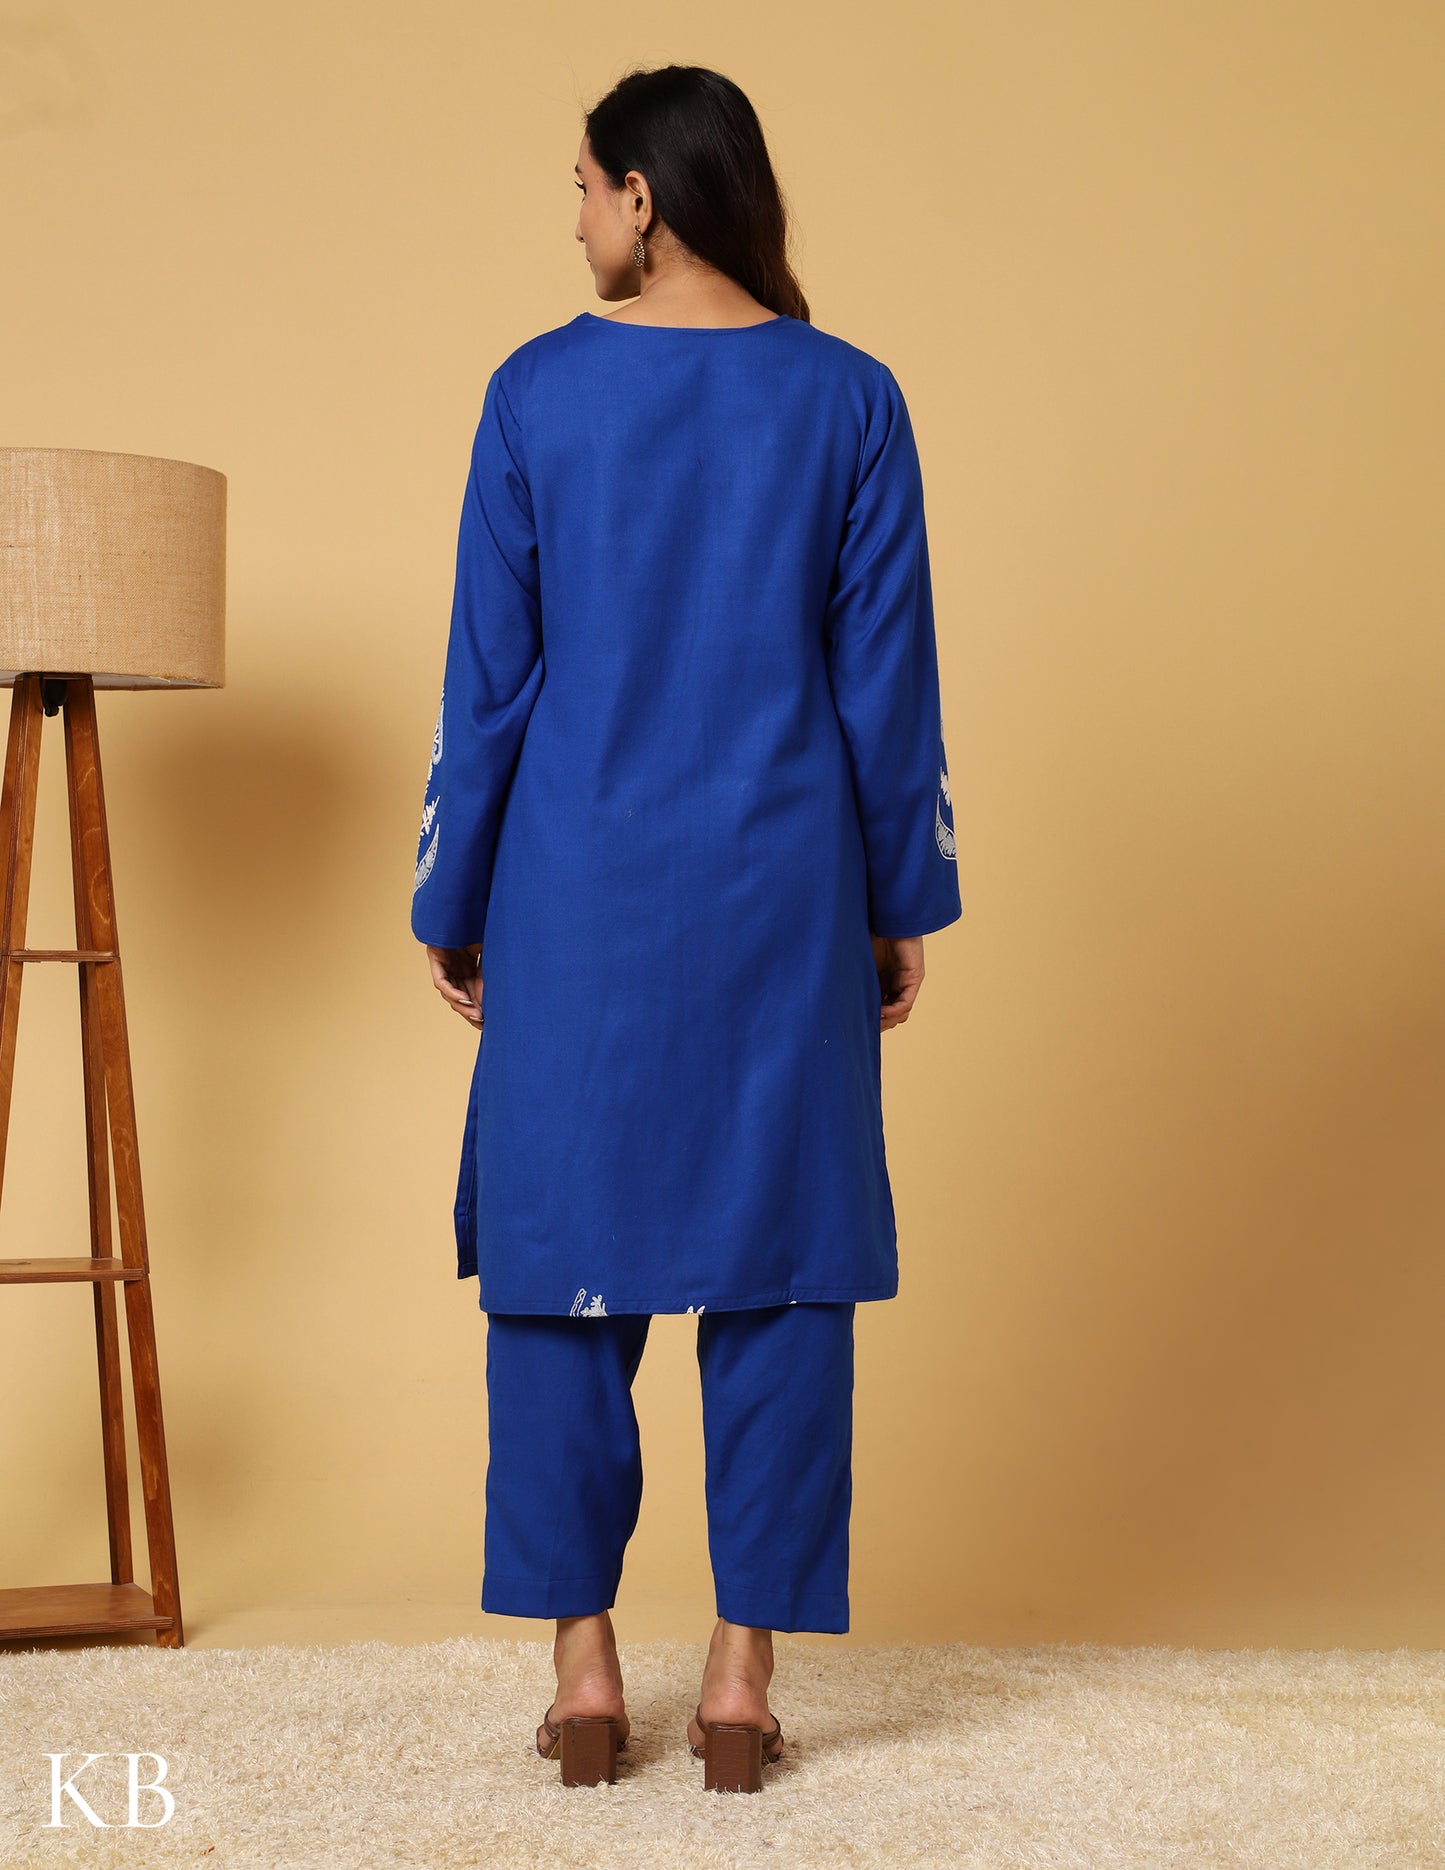 Egyptian Blue Aari Embroidered Woolen Suit - Kashmir Box